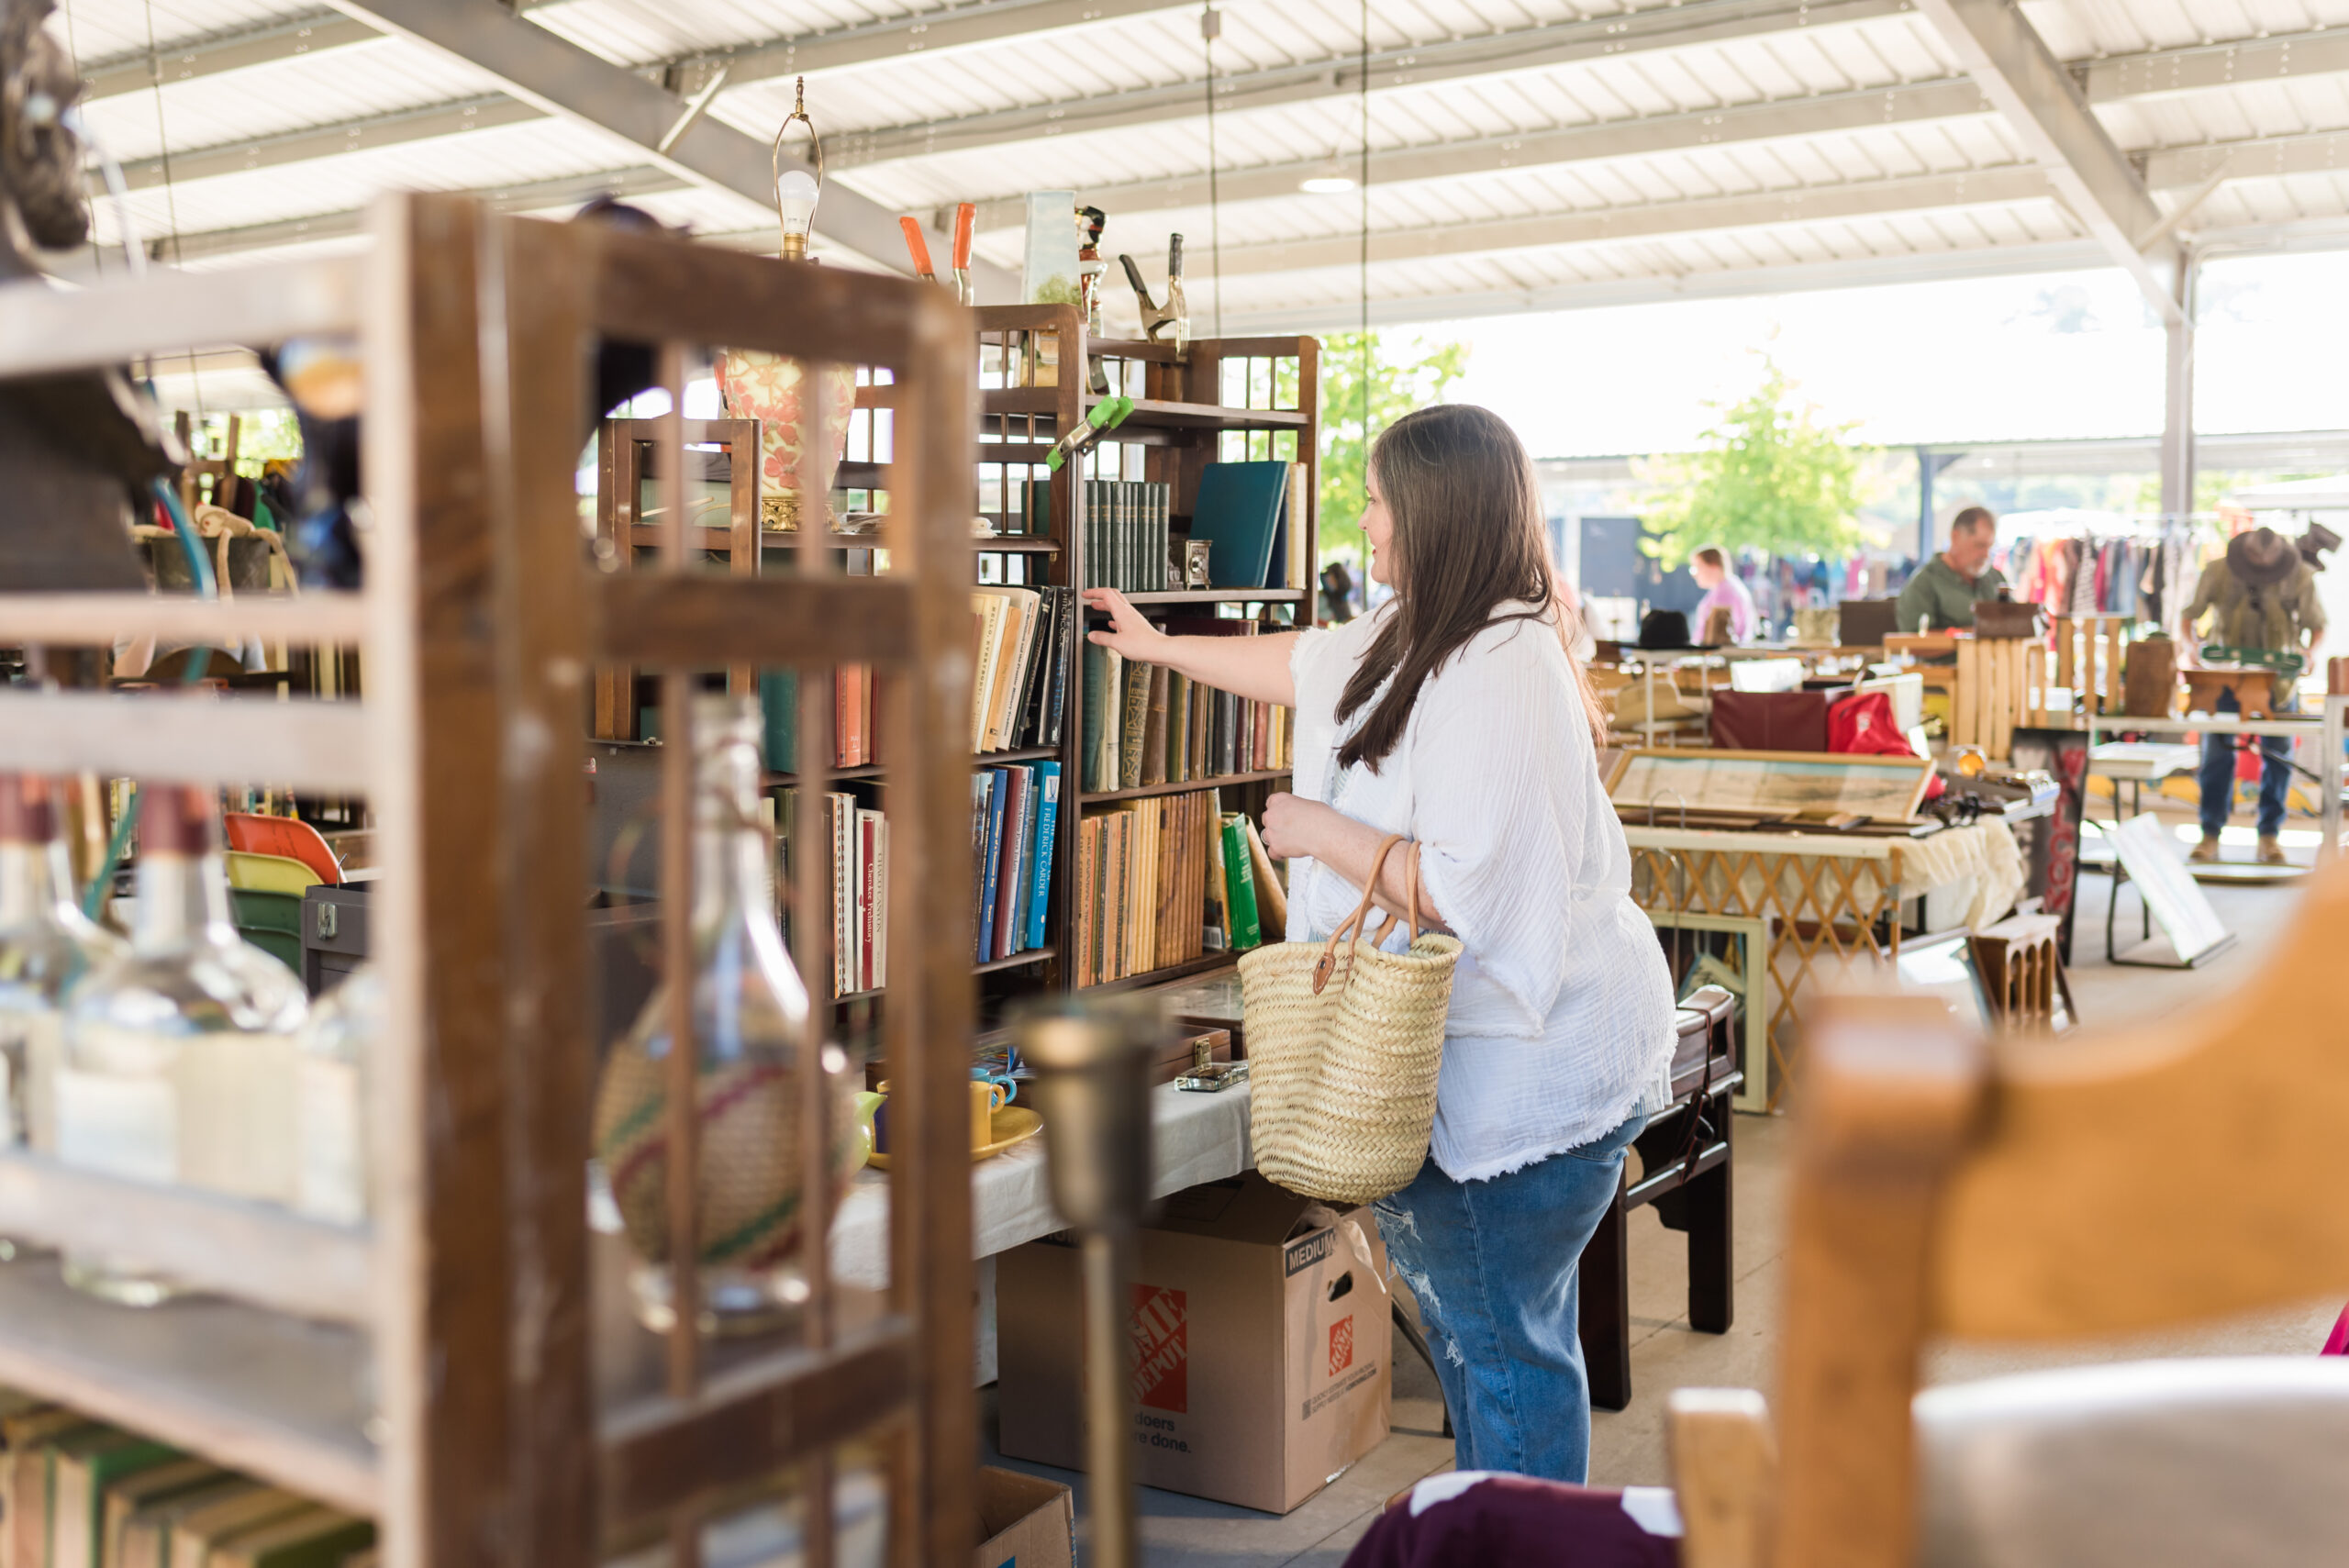 Lauren examines antique books on a shelving unit at an antique market